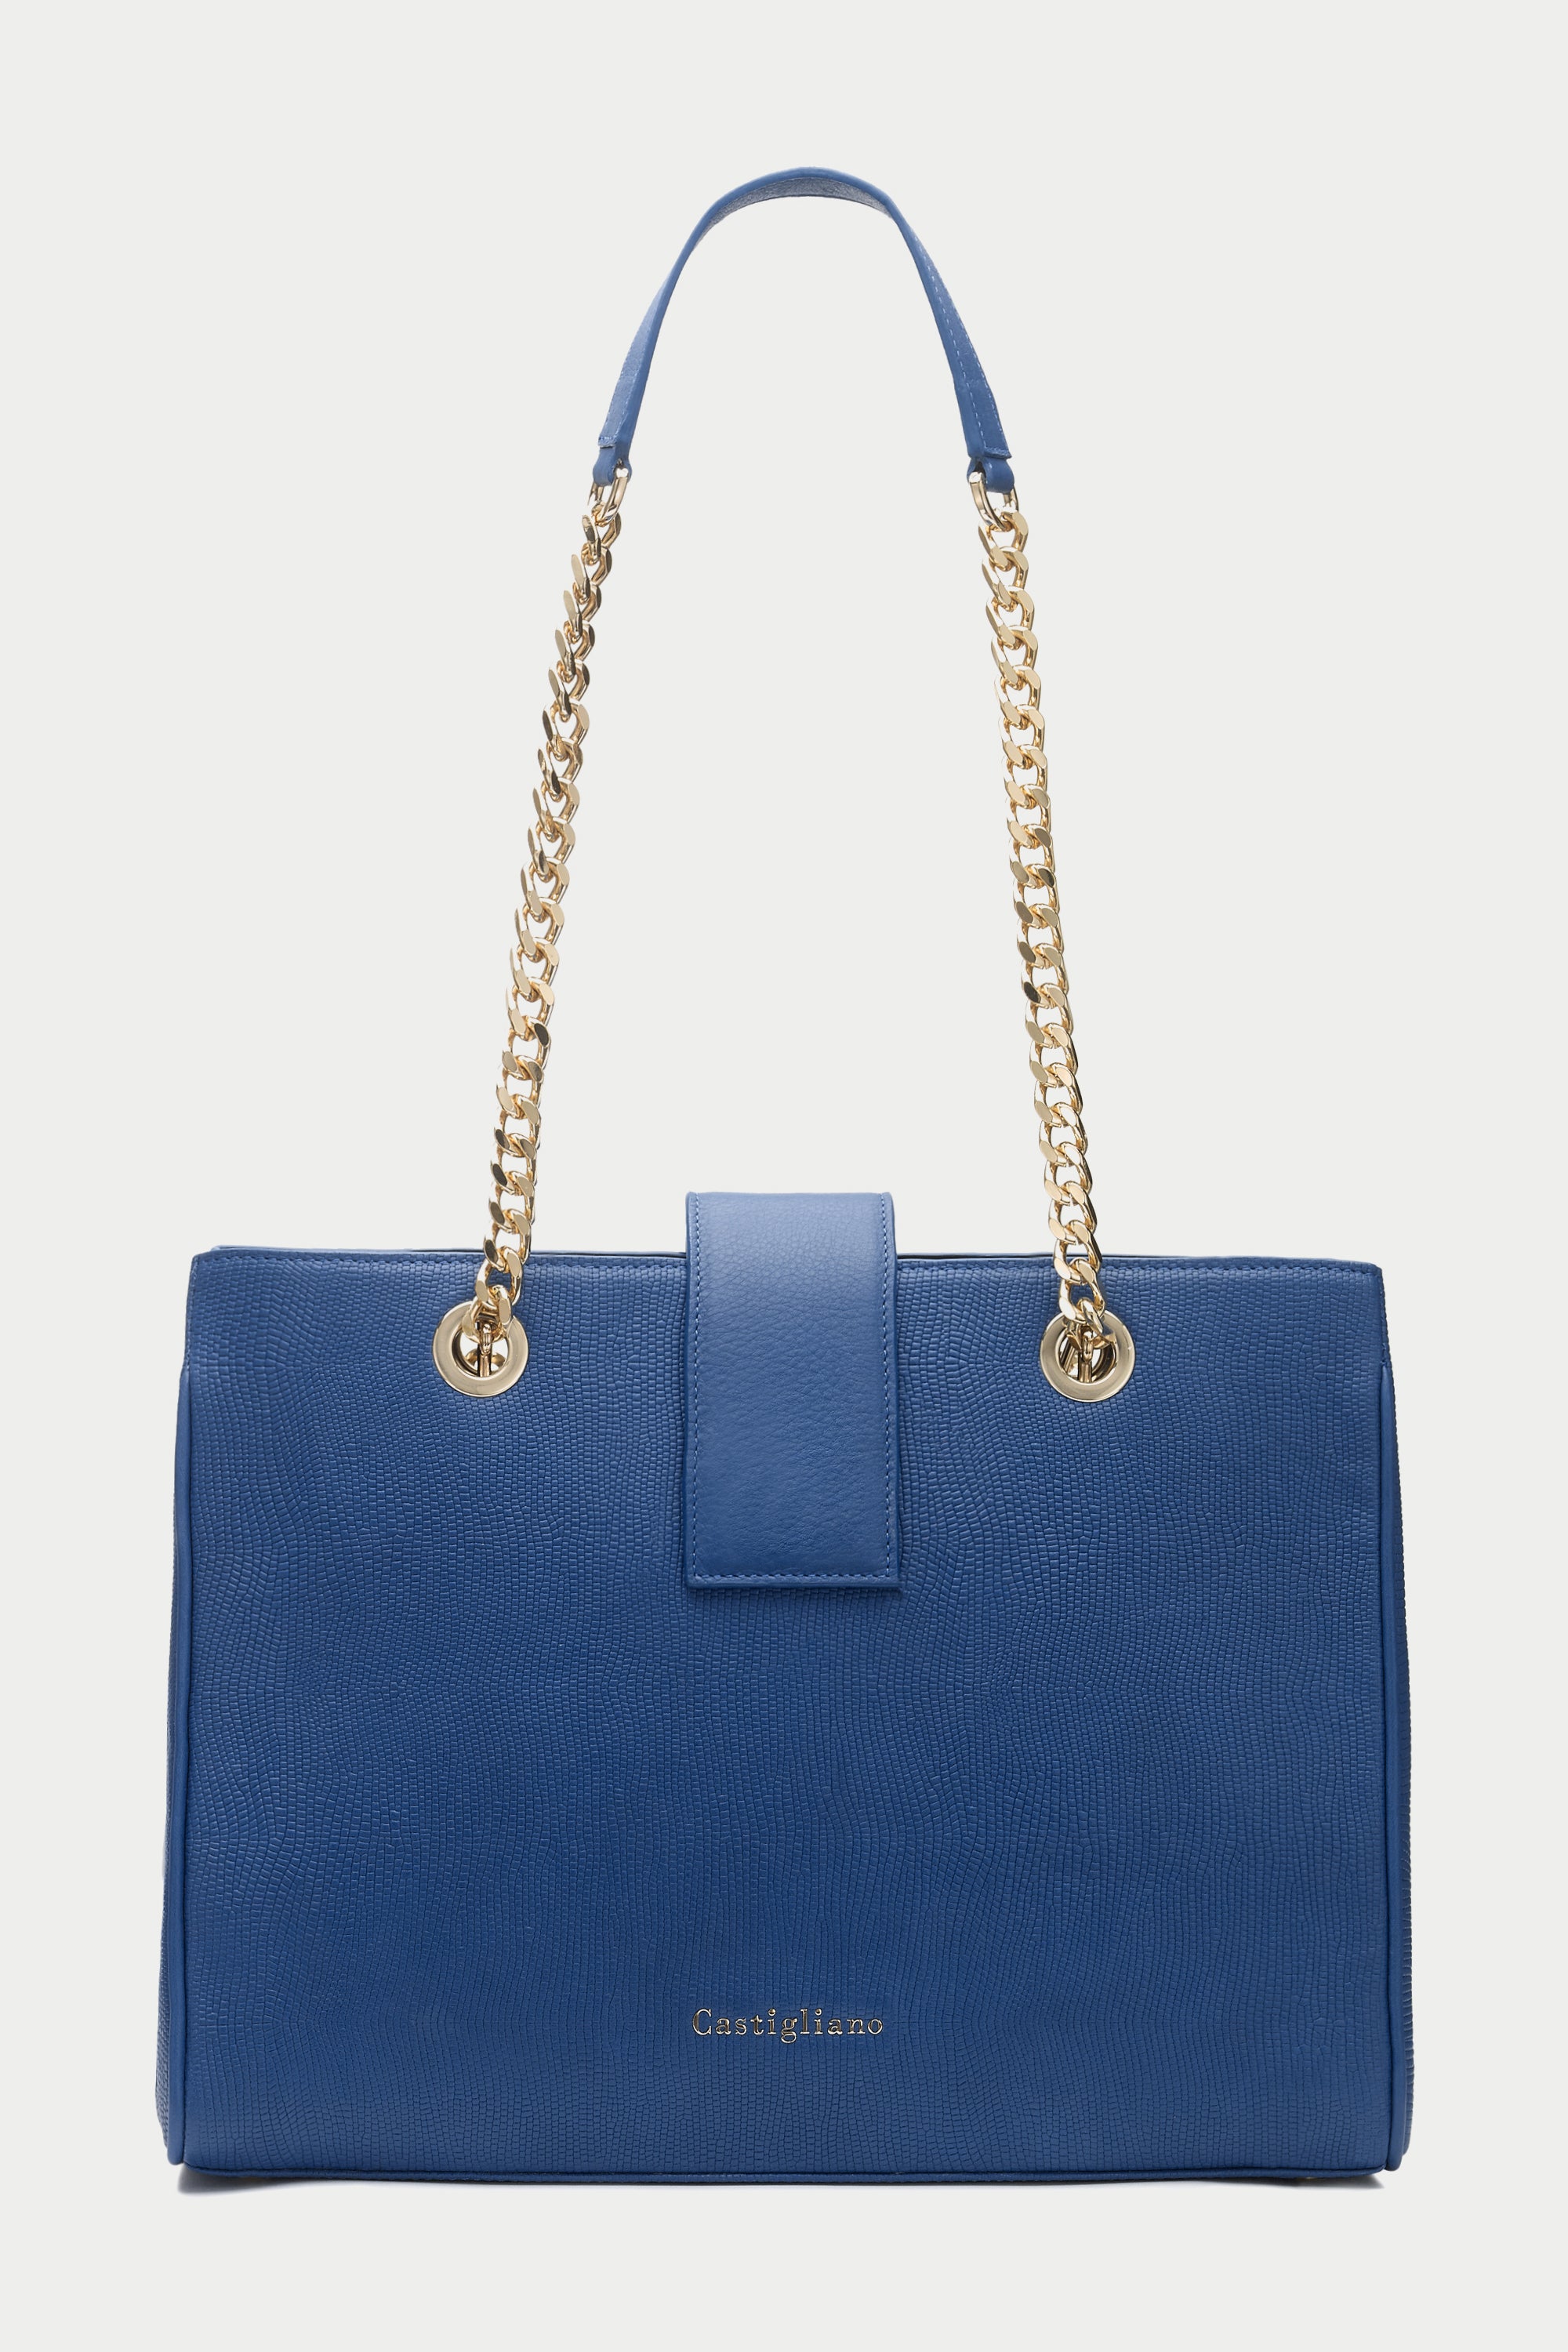 Handbags | Caroline Castigliano